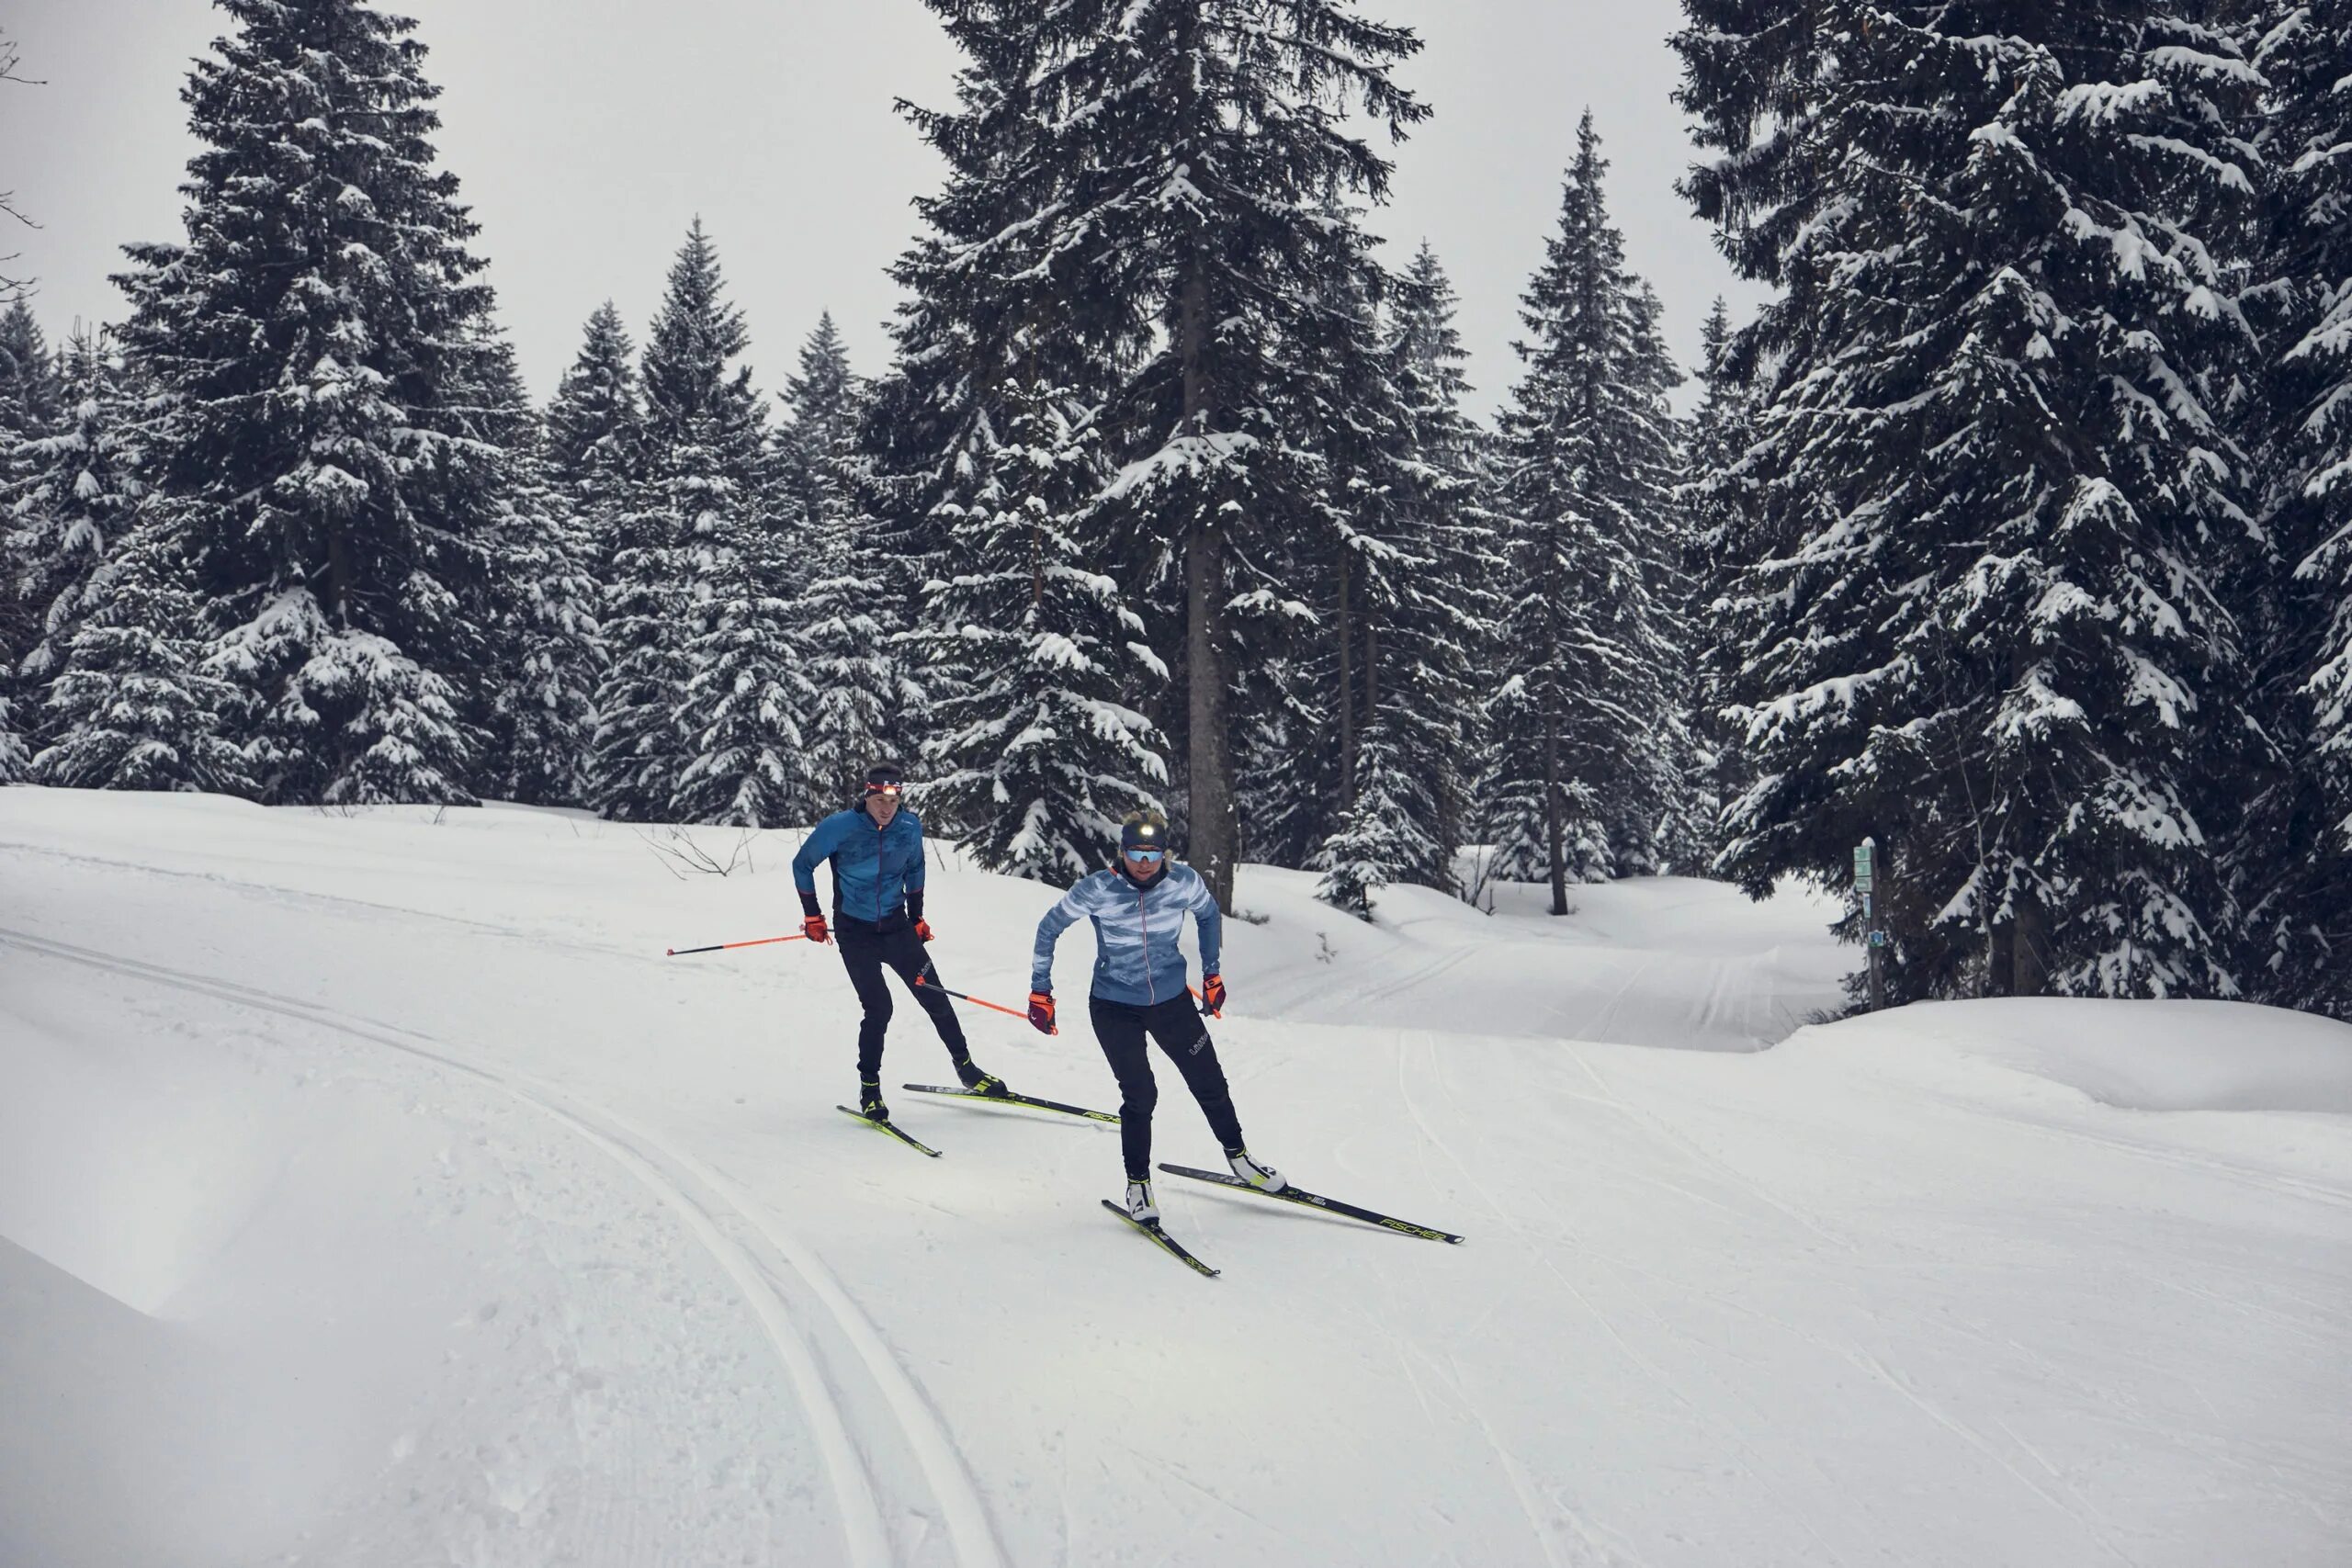 Кросс Кантри лыжи. Катание на лыжах кросс Кантри. Ski Skate. Nordic Ski. Skiing cross country skis